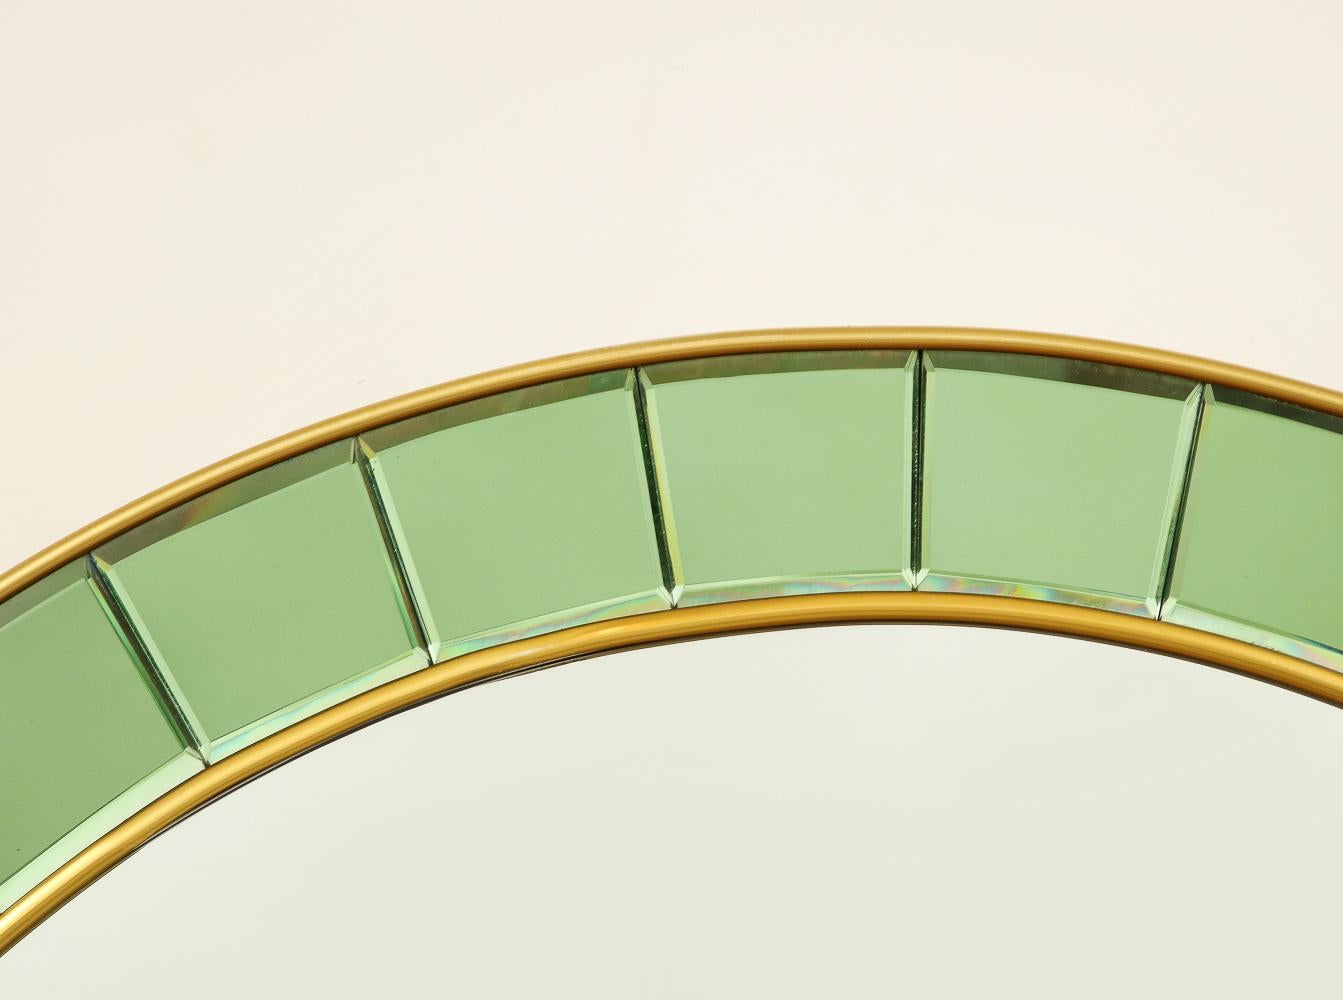 Brass, mirror, green glass tiles. Elegant wall mirror with soft-green glass tiles surrounding a central circular mirror, & brass trim.